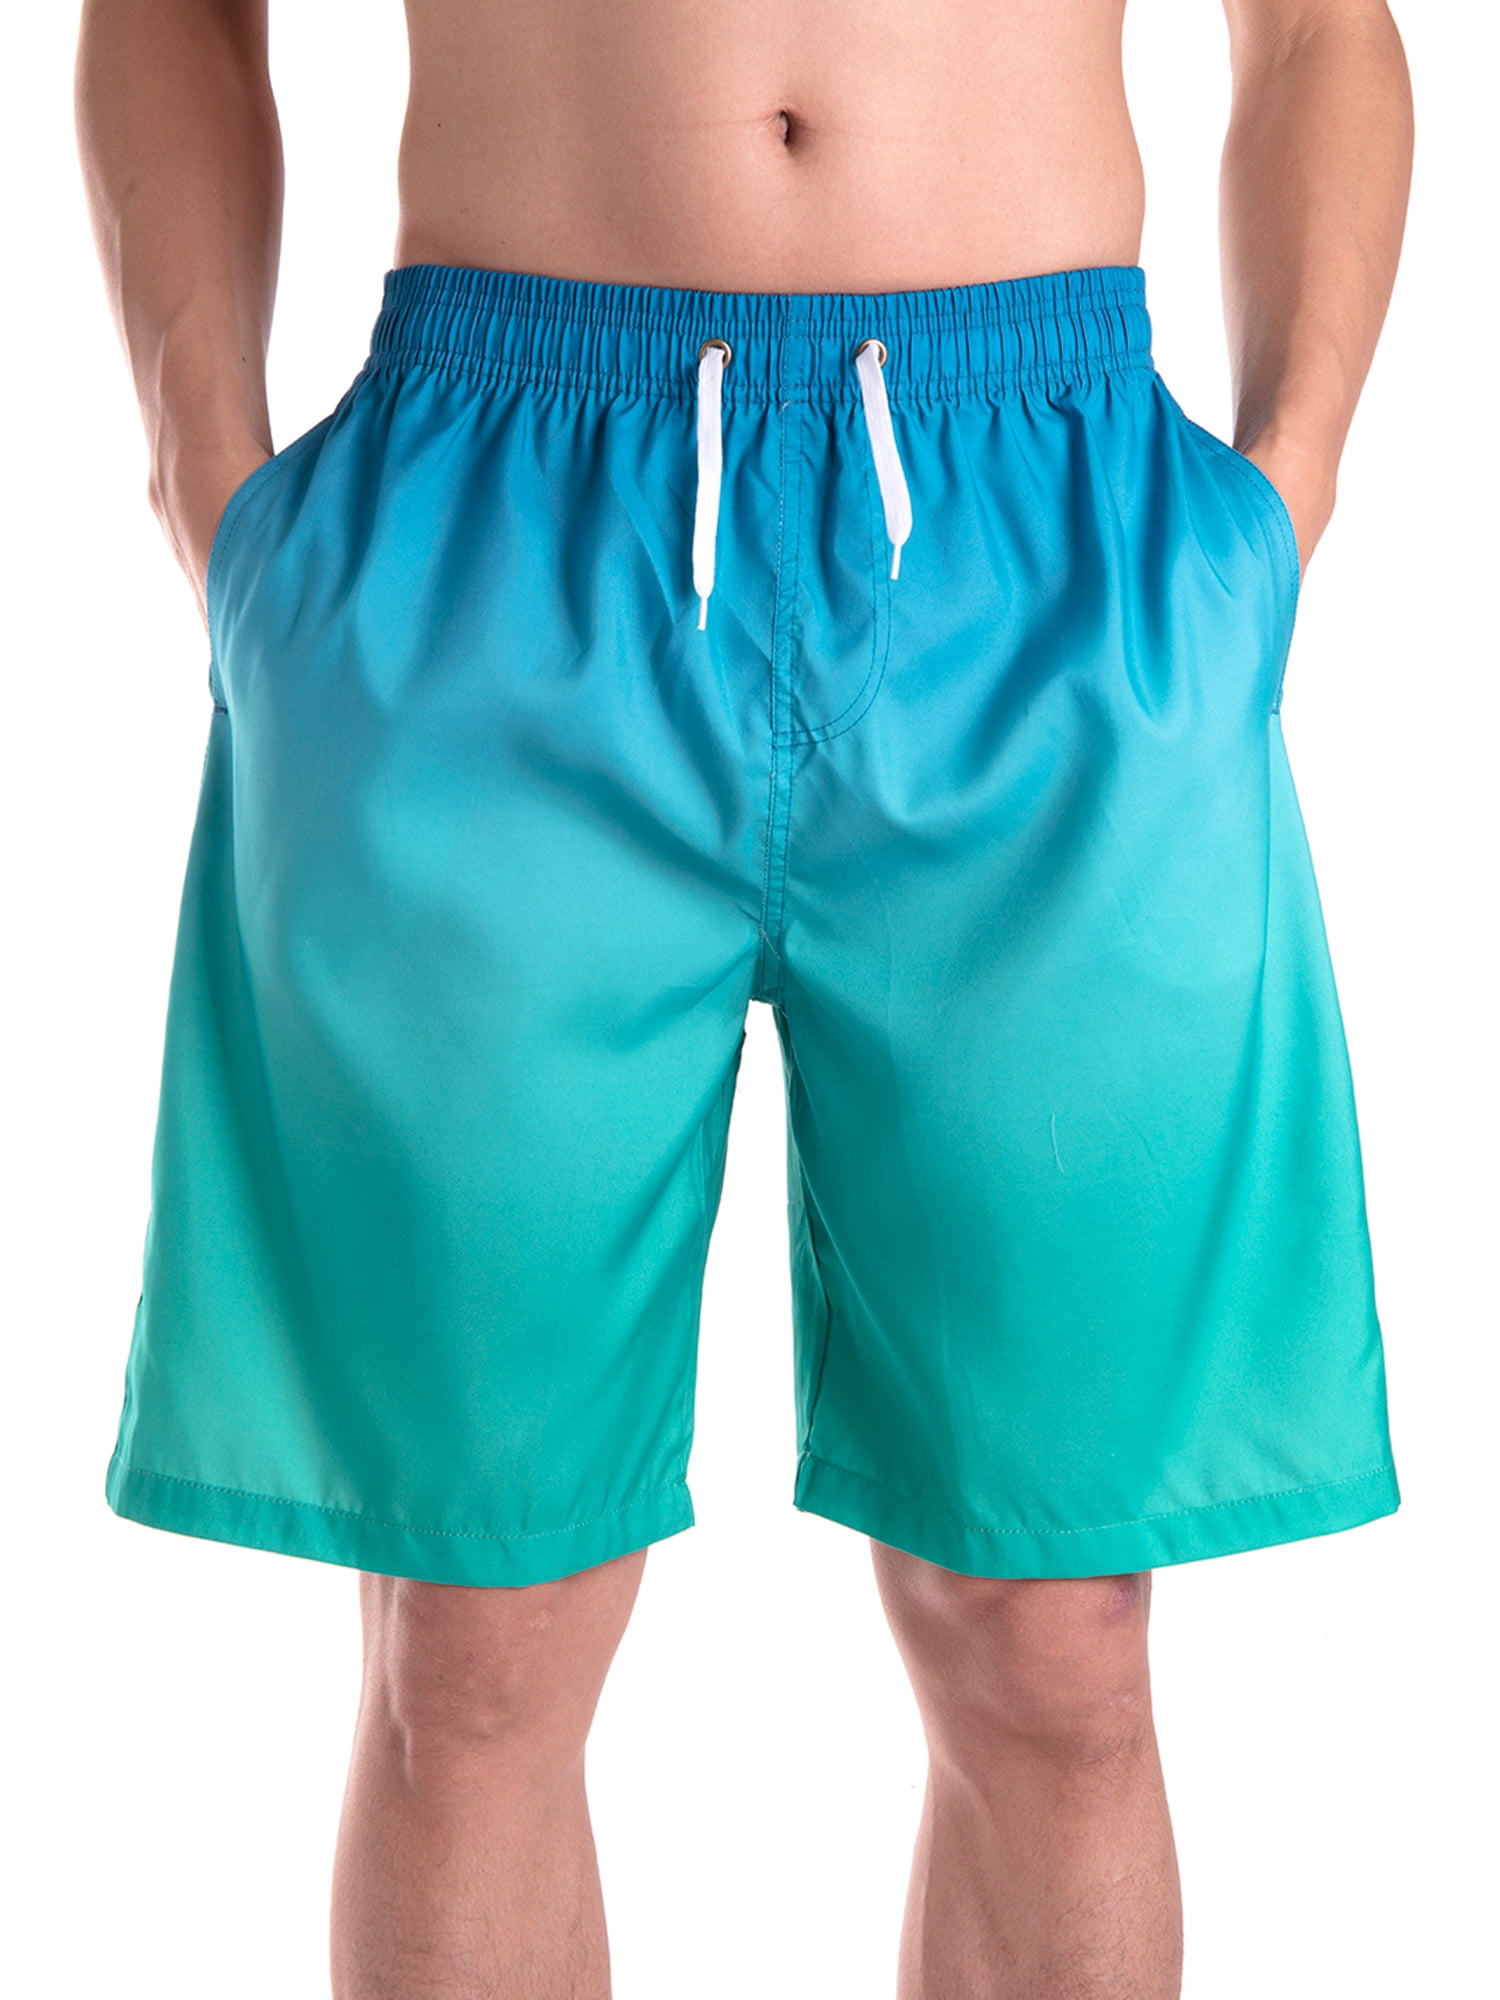 SAYFUT - Dry Fit Shorts Board Shorts Swim Trunks,Beach Surfing Running ...